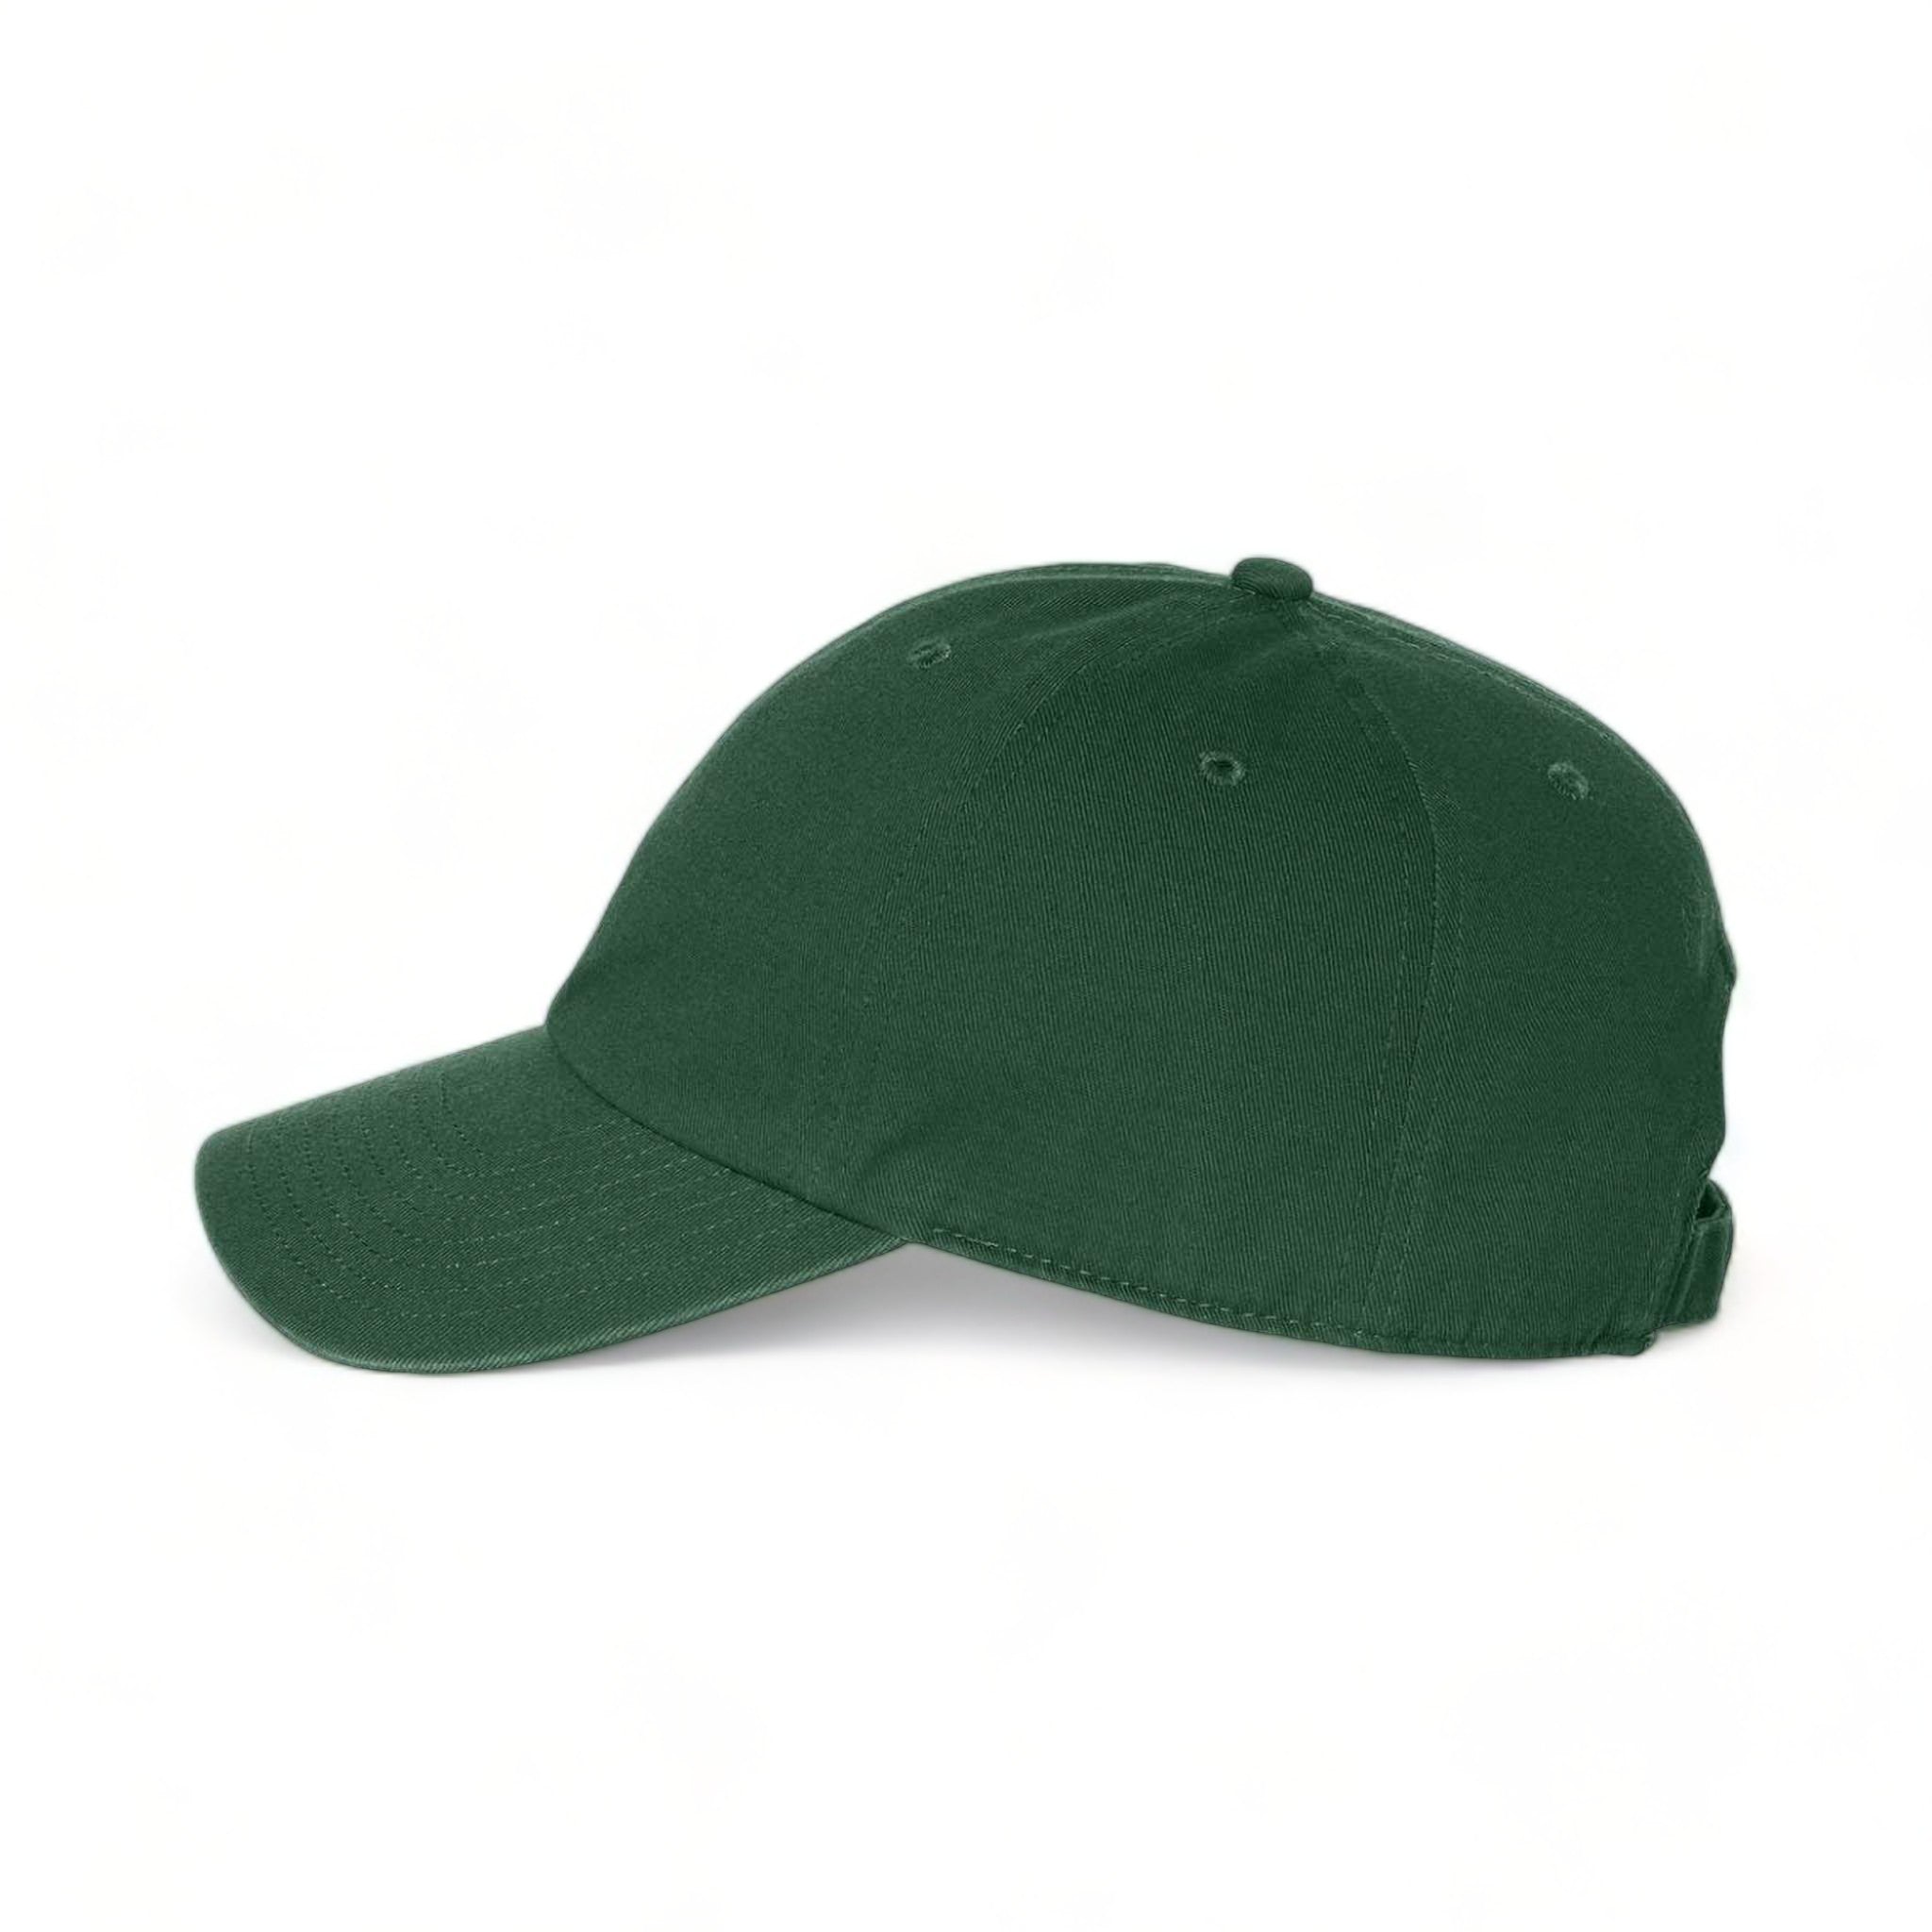 Side view of 47 Brand 4700 custom hat in dark green